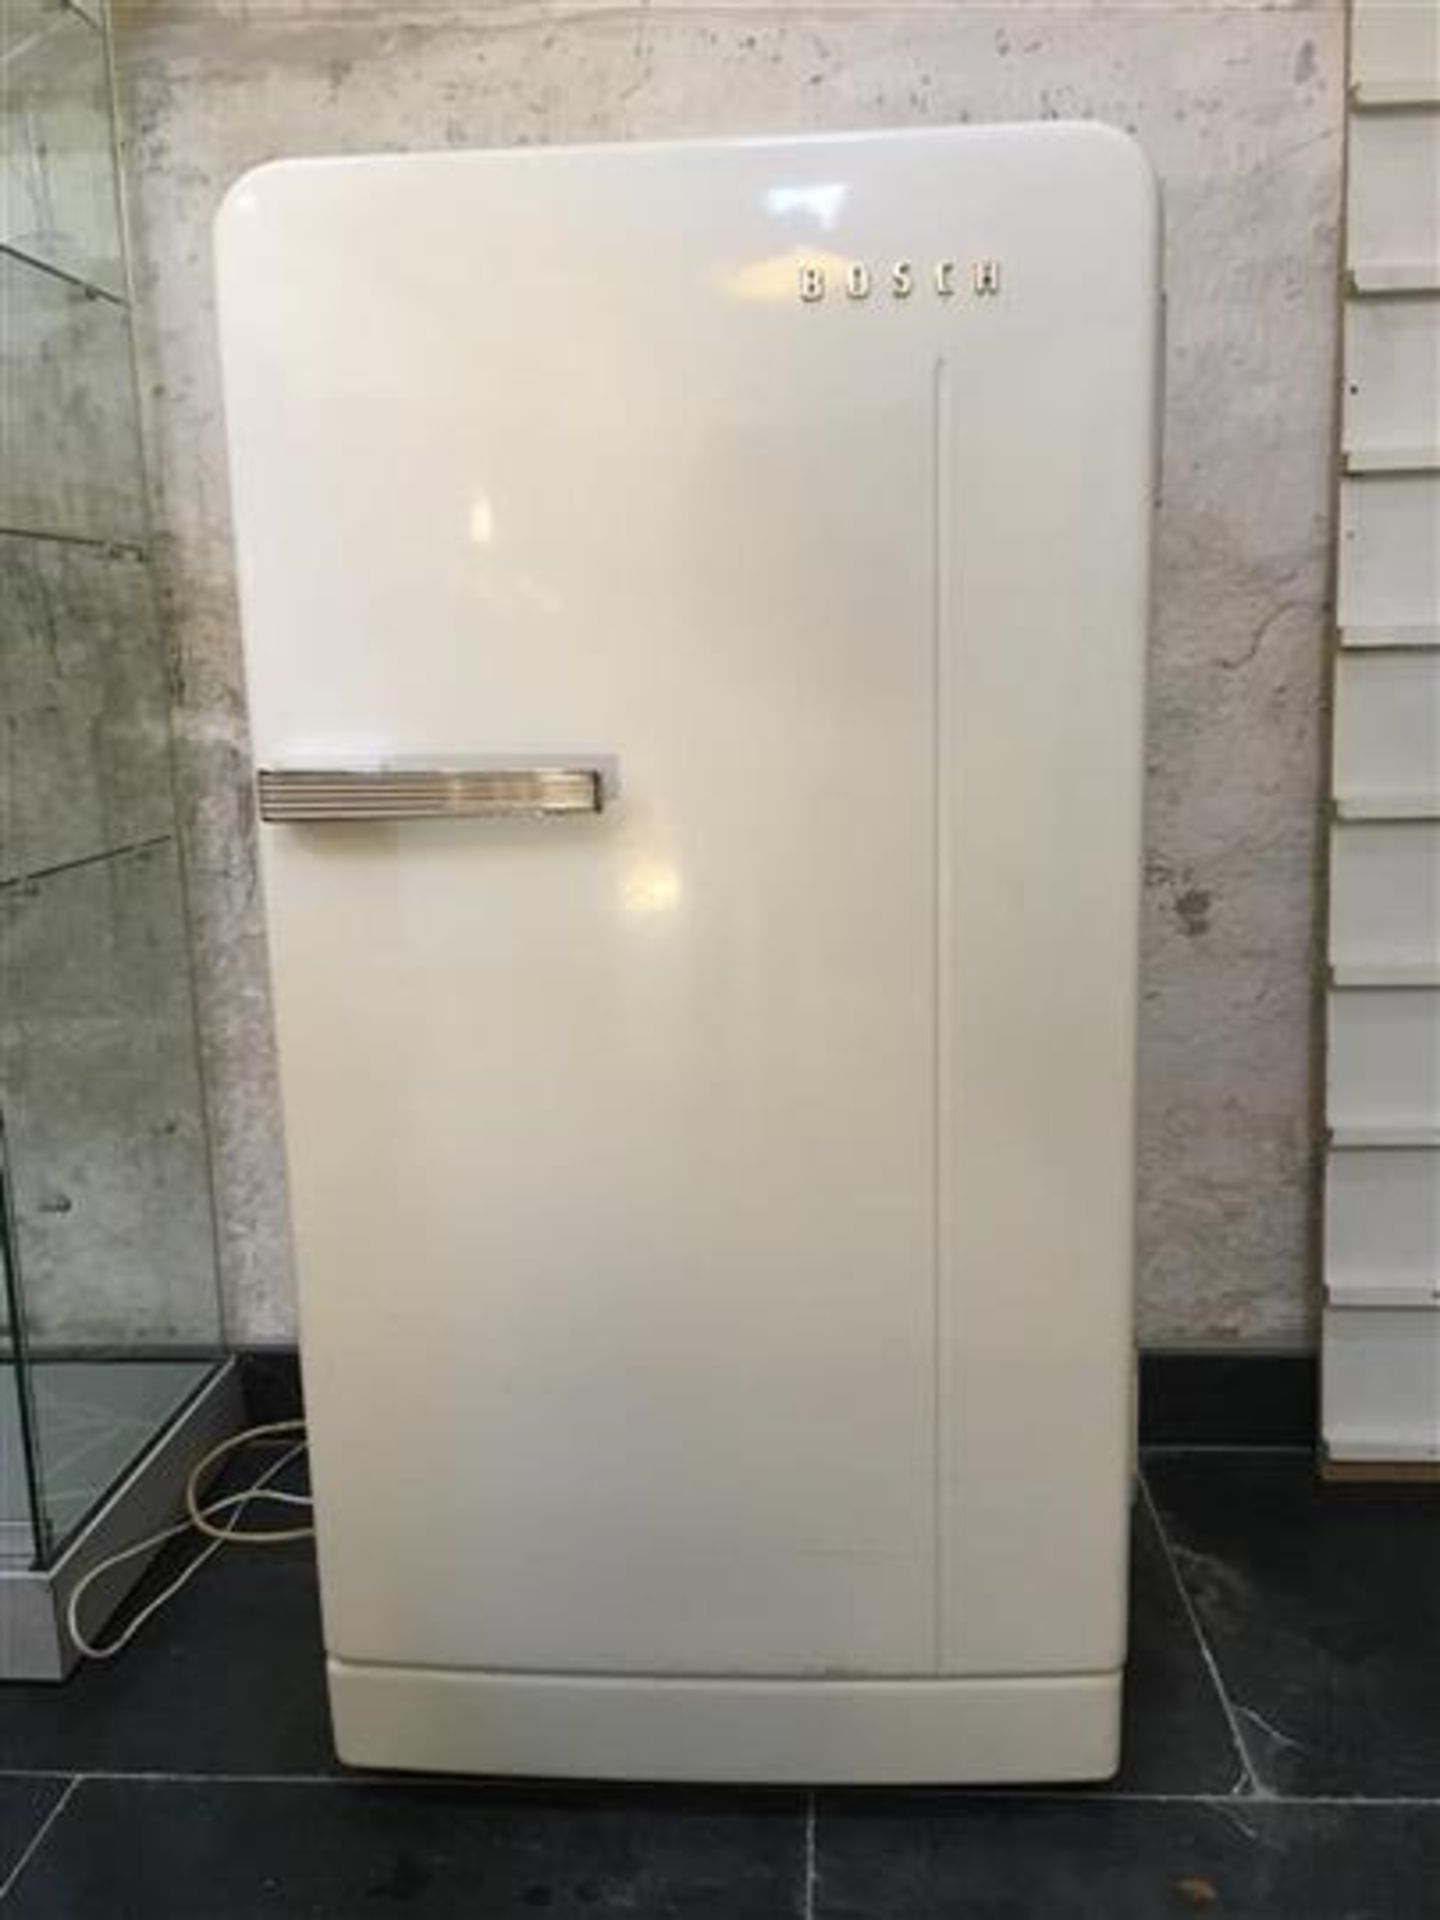 Vintage Bosch koelkast, met productindeling, jaren '60.